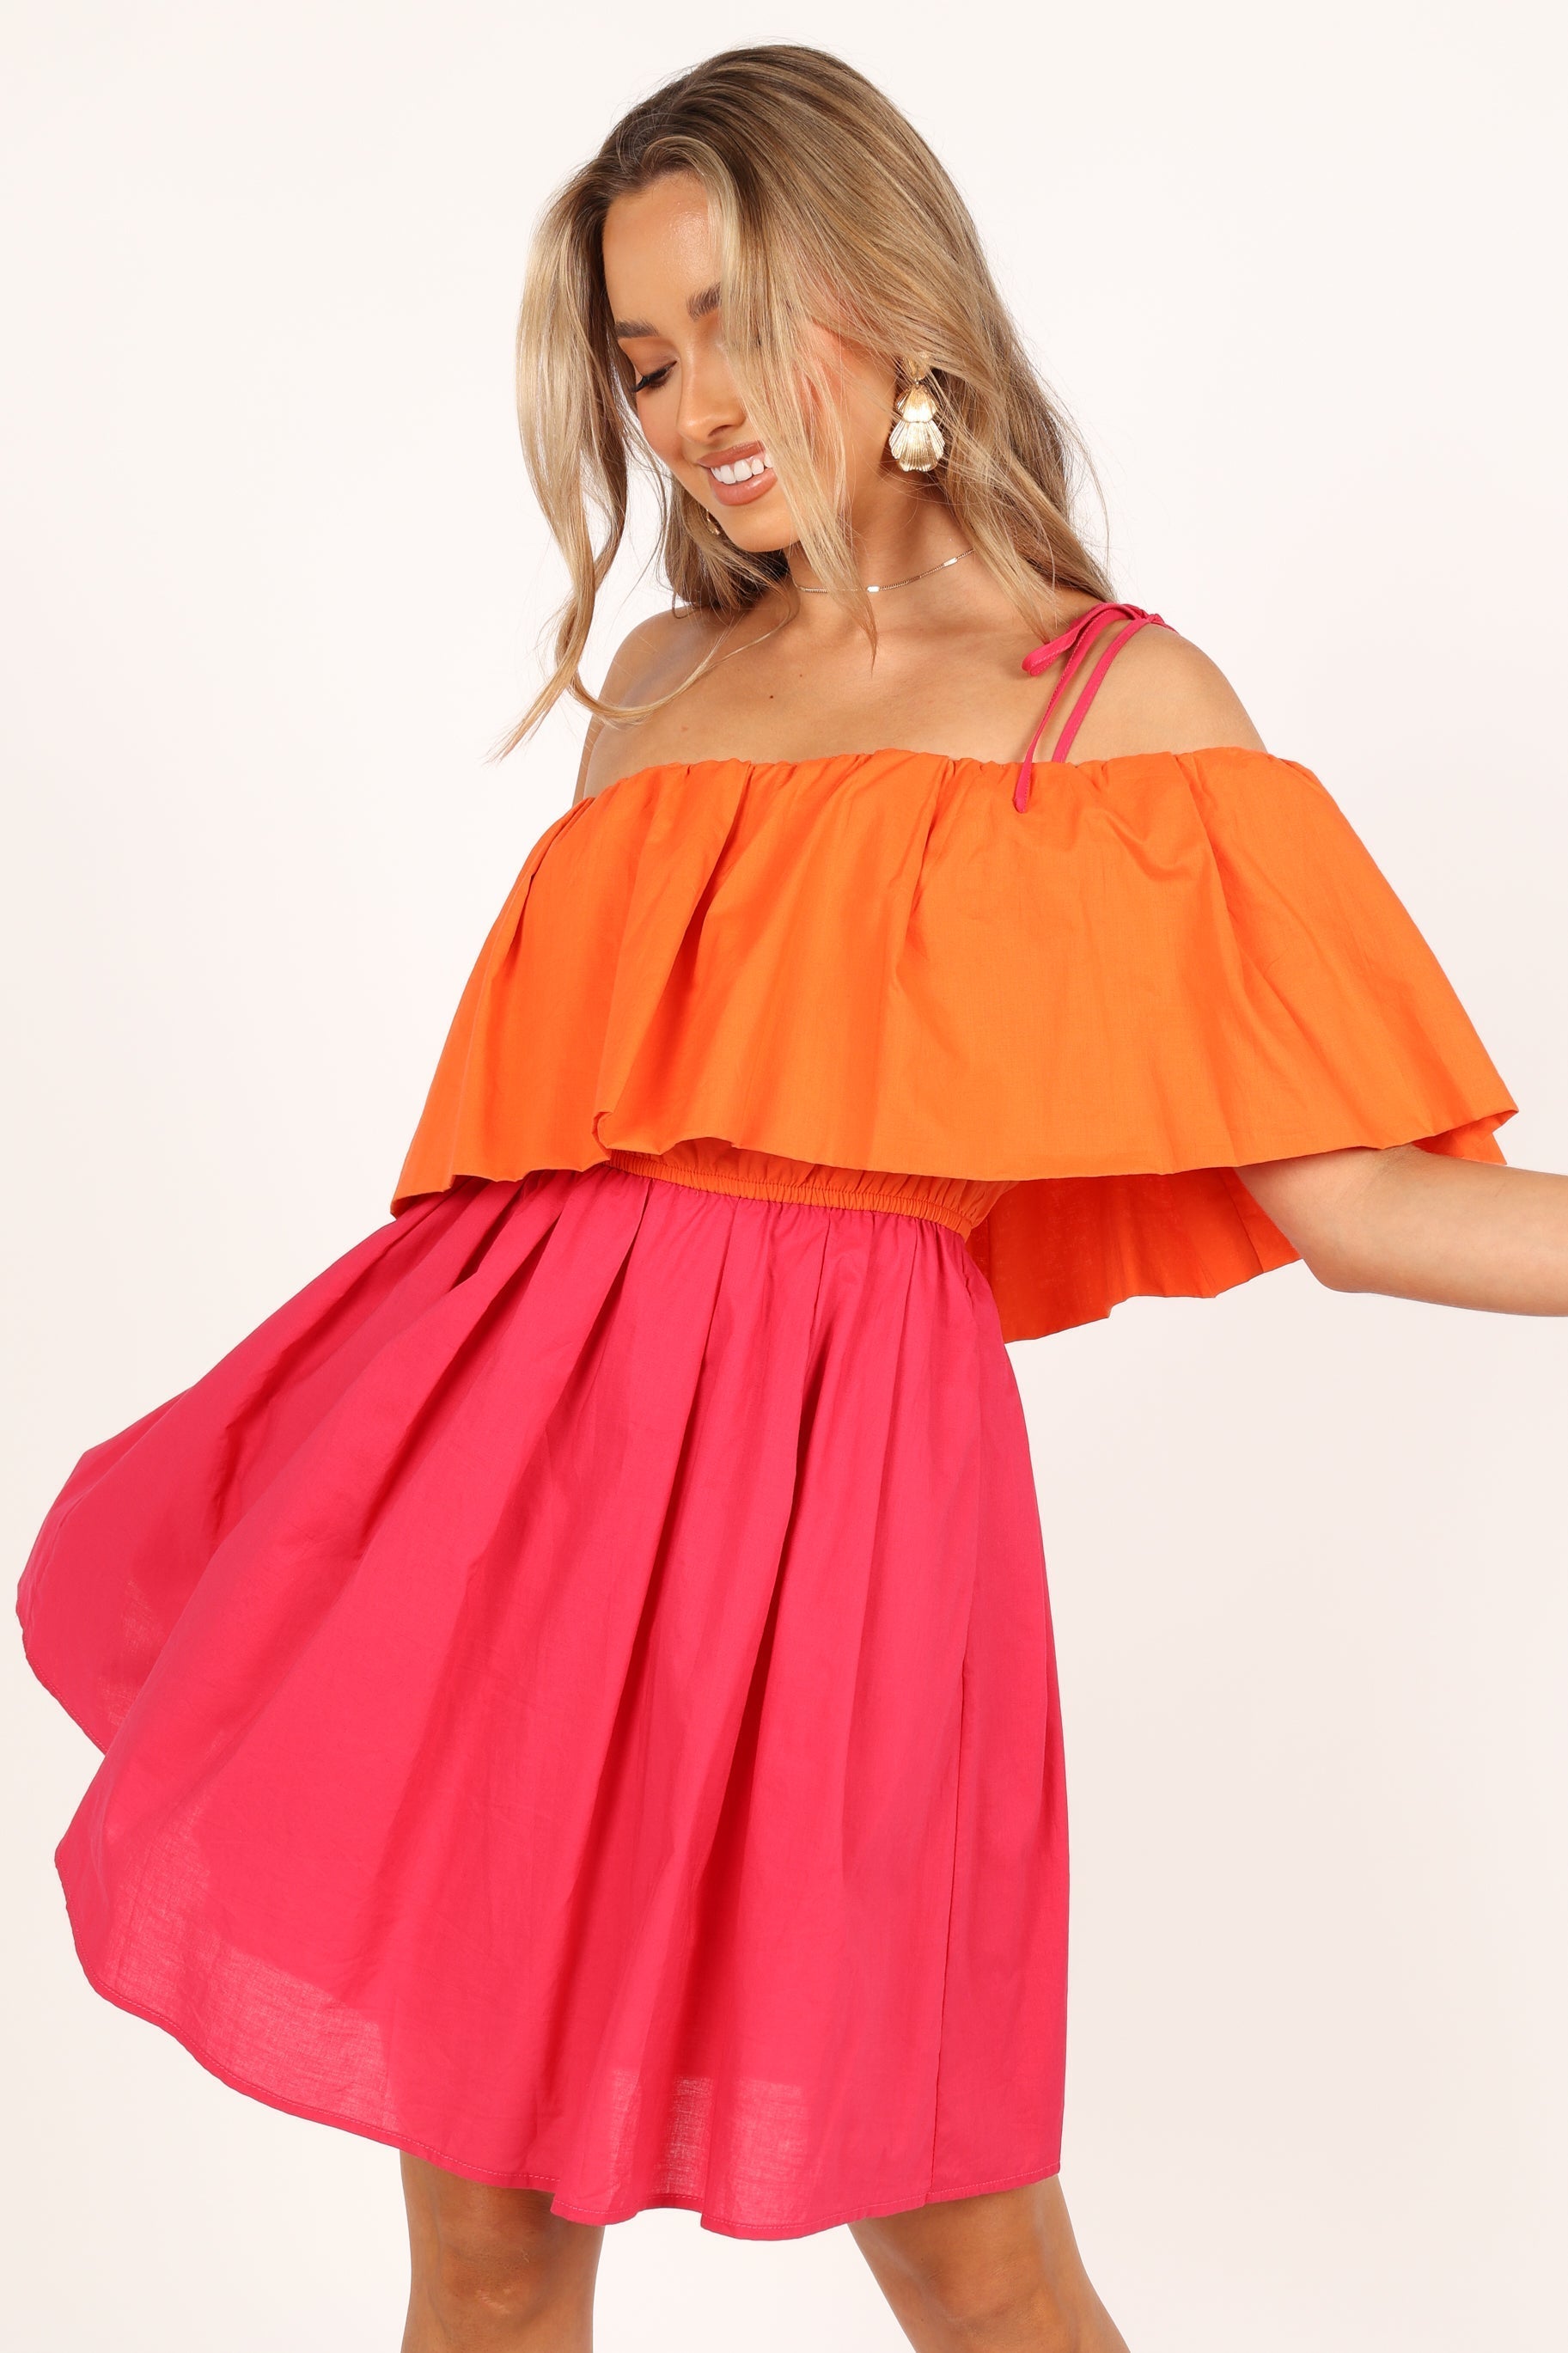 Shoulder & Petal Maeva - Pup Dress Pink/Orange One Mini USA -